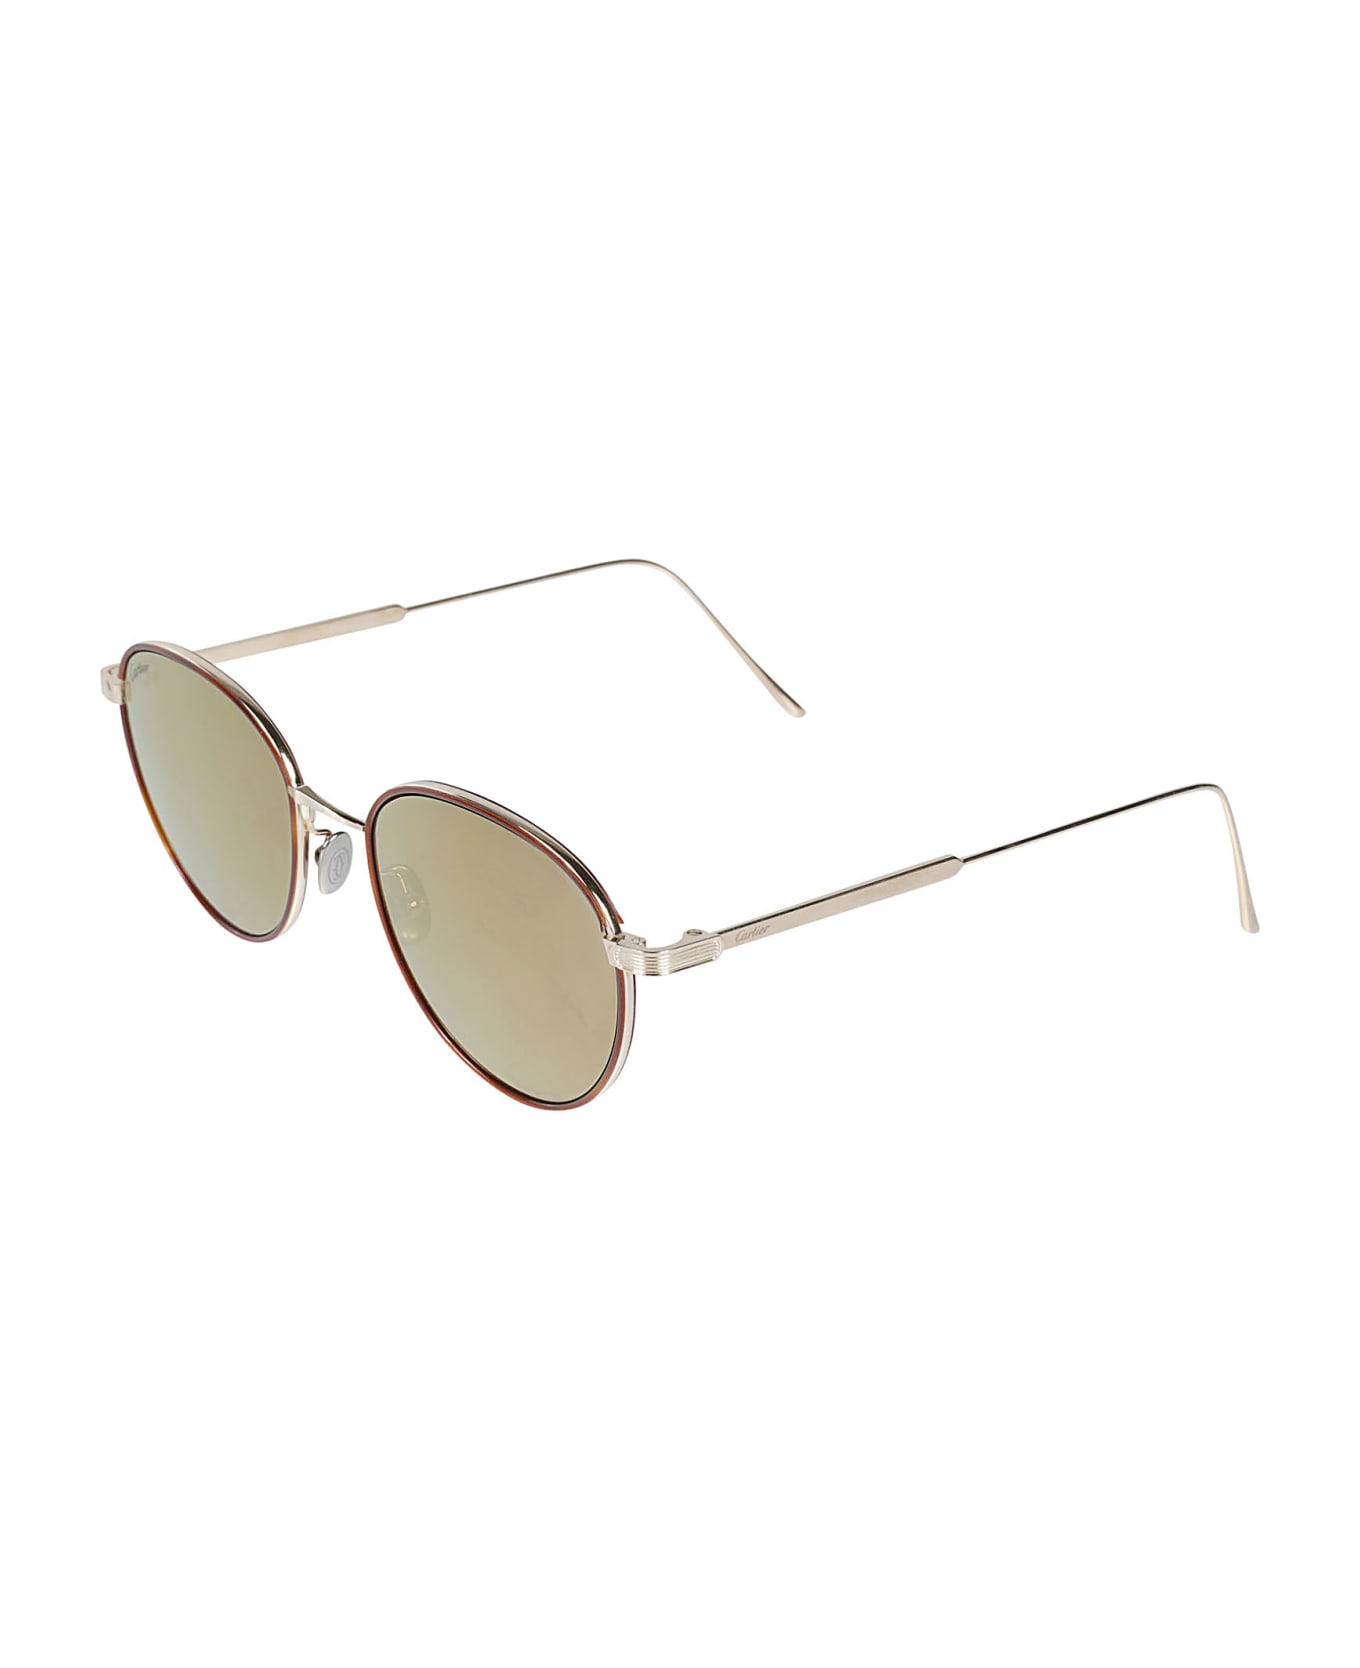 Cartier Eyewear Round Sunglasses - Gold/Bronze